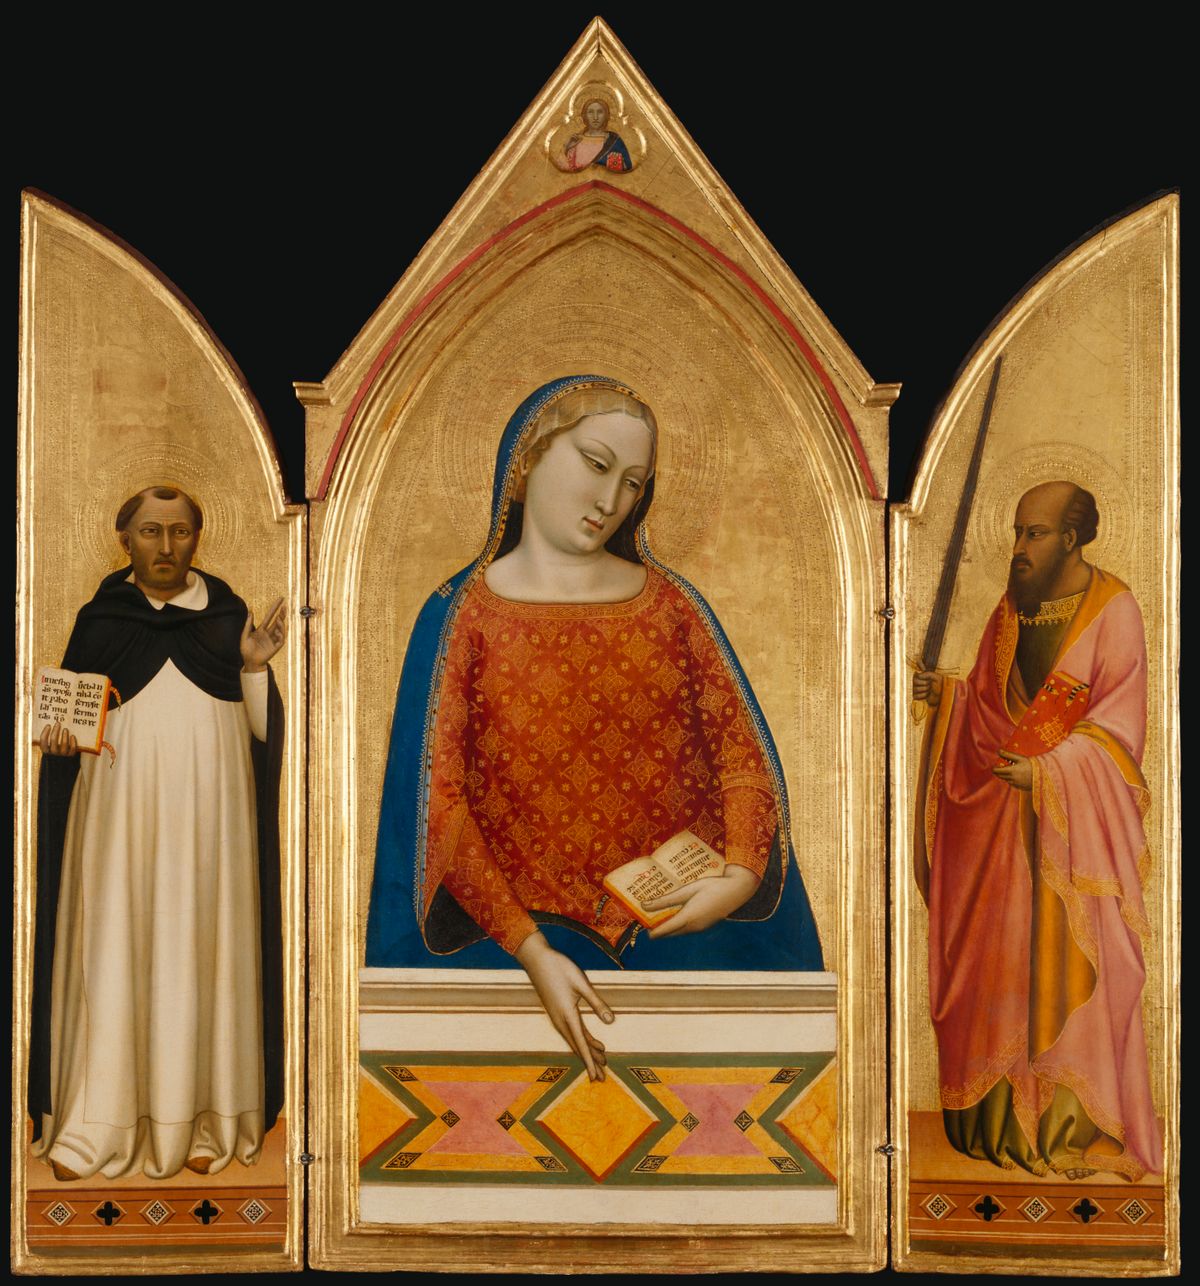 The Virgin Mary with Saints Thomas Aquinas and Paul by
Bernardo Daddi (about 1335) - Public Domain Catholic Painting